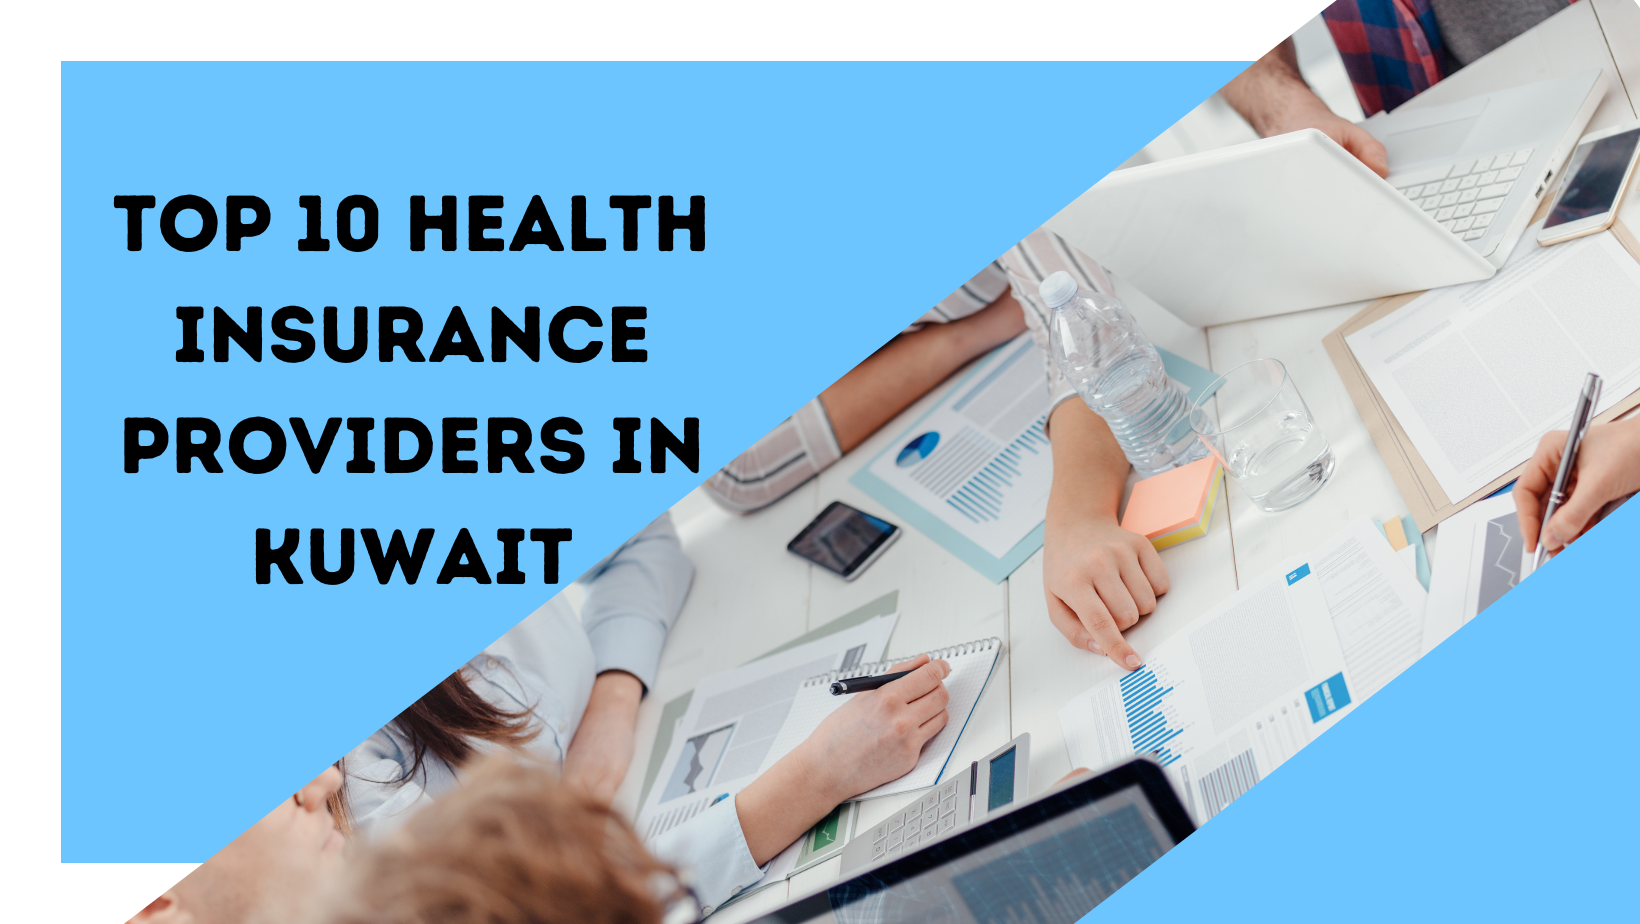 Top 10 Health Insurance Providers in Kuwait